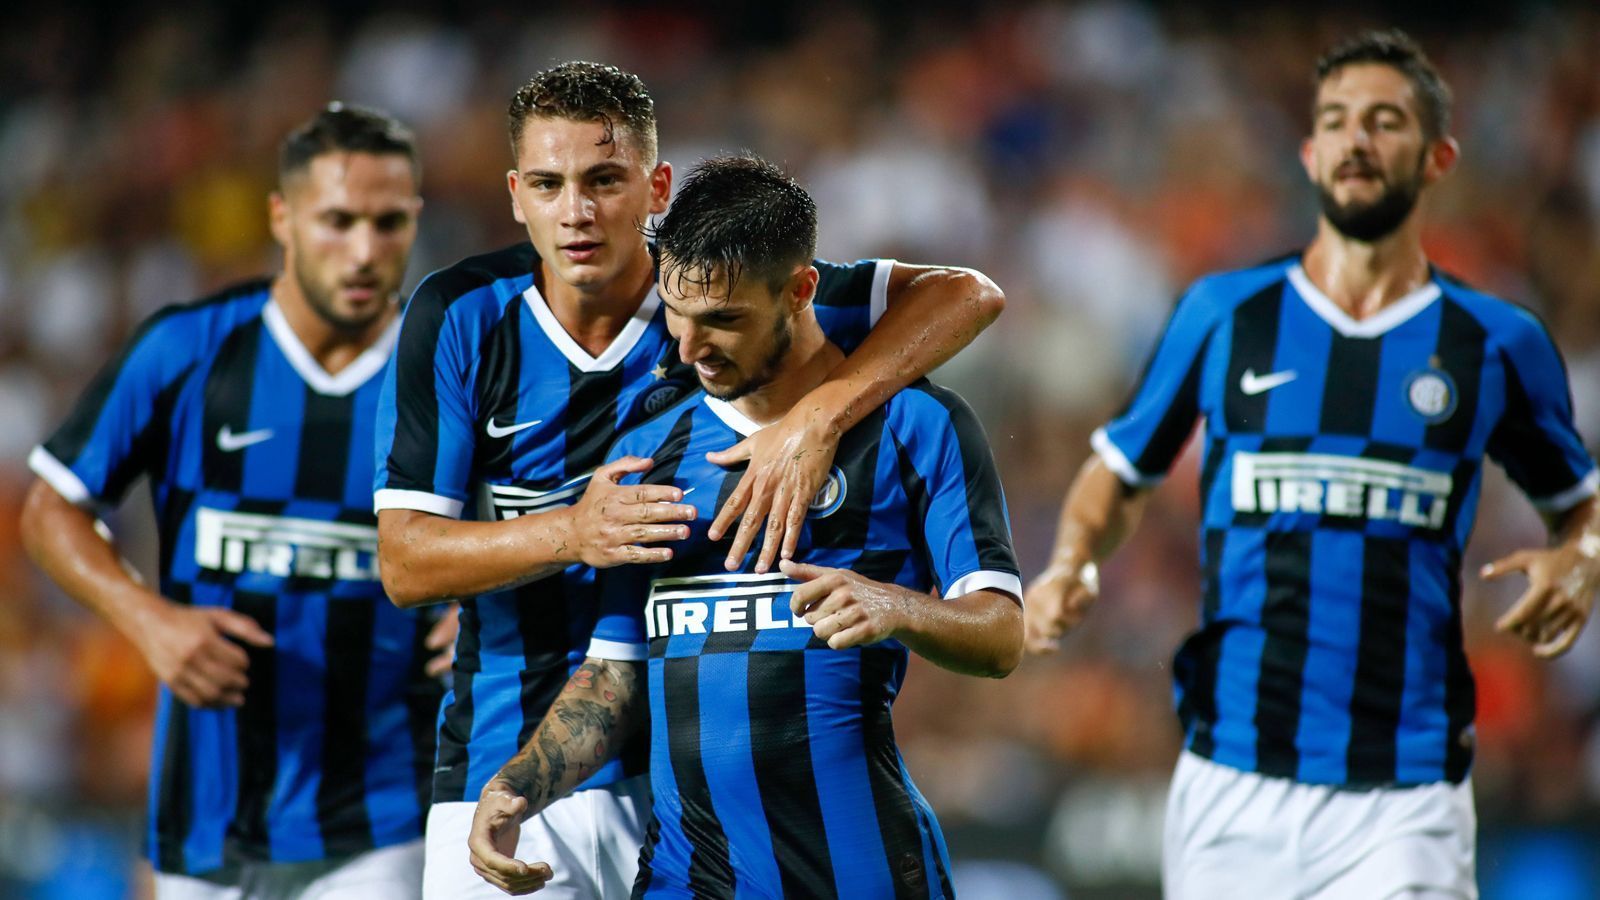 
                <strong>Topf 3: Inter Mailand</strong><br>
                Vierter in ItalienGrößter CL-Erfolg: Sieger 1964, 1965, 2010
              